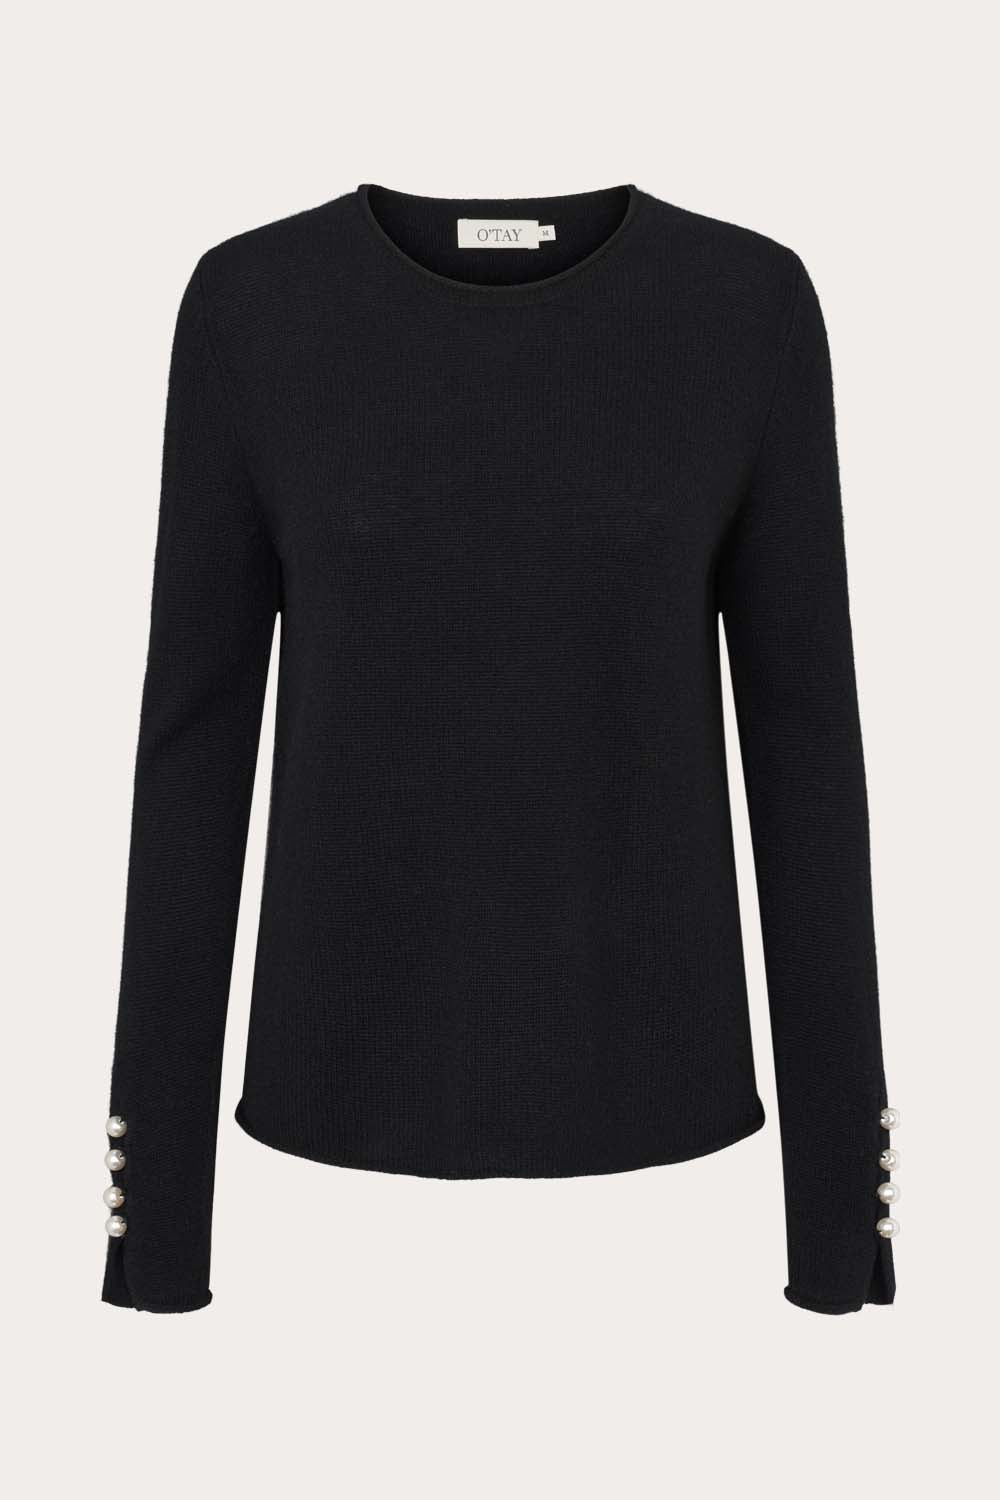 O'TAY Abbelone Sweater Blouses Black